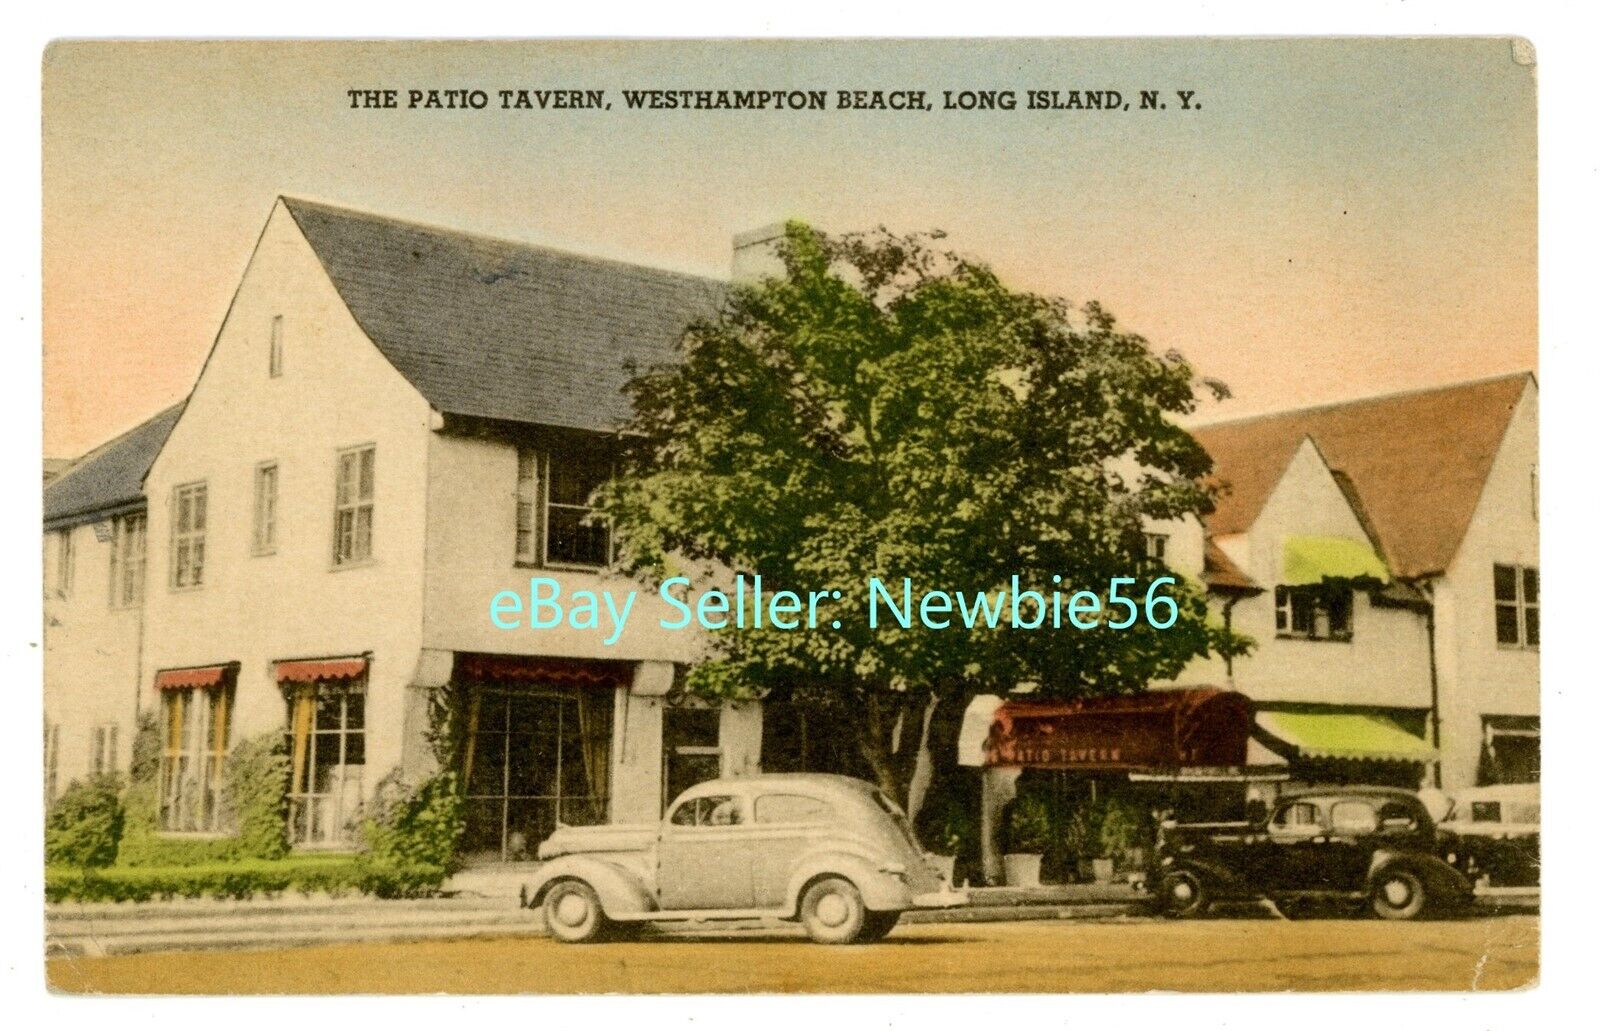 Westhampton Beach LI NY - THE PATIO TAVERN RESTAURANT - c1940s Postcard